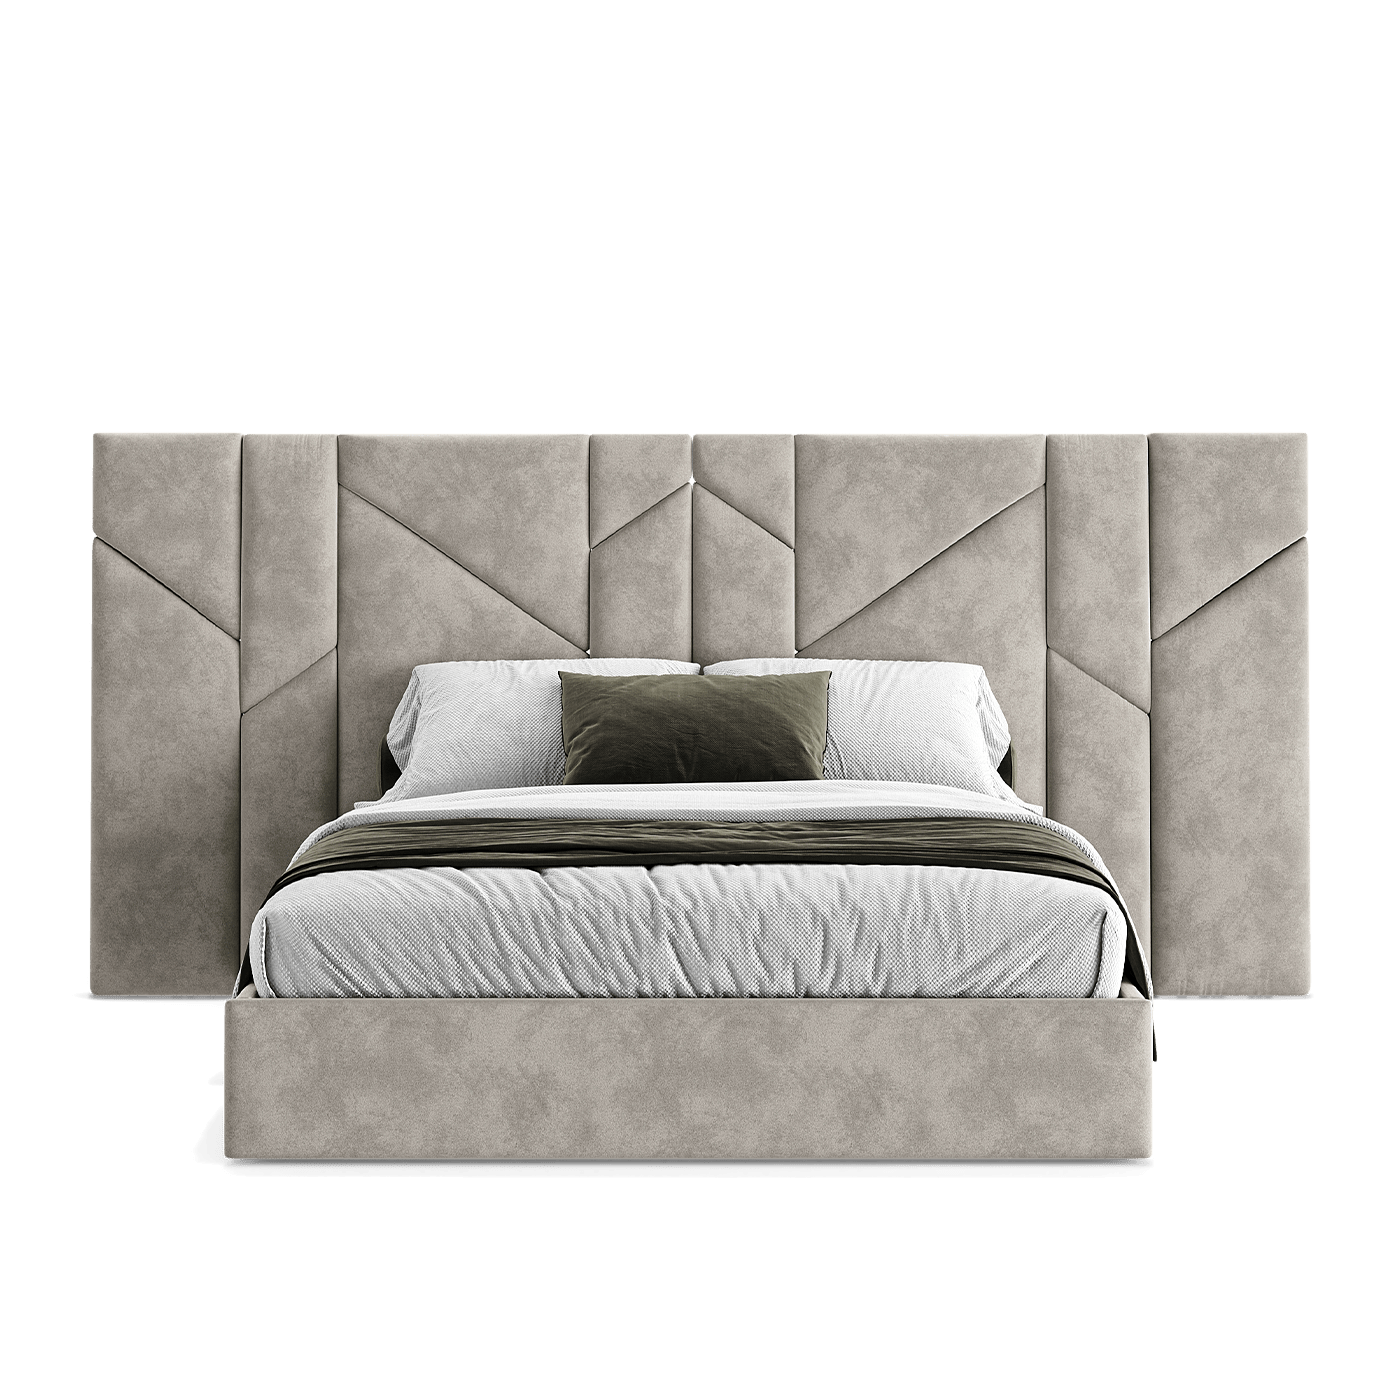 Bed 160 x 195 cm - SAM137